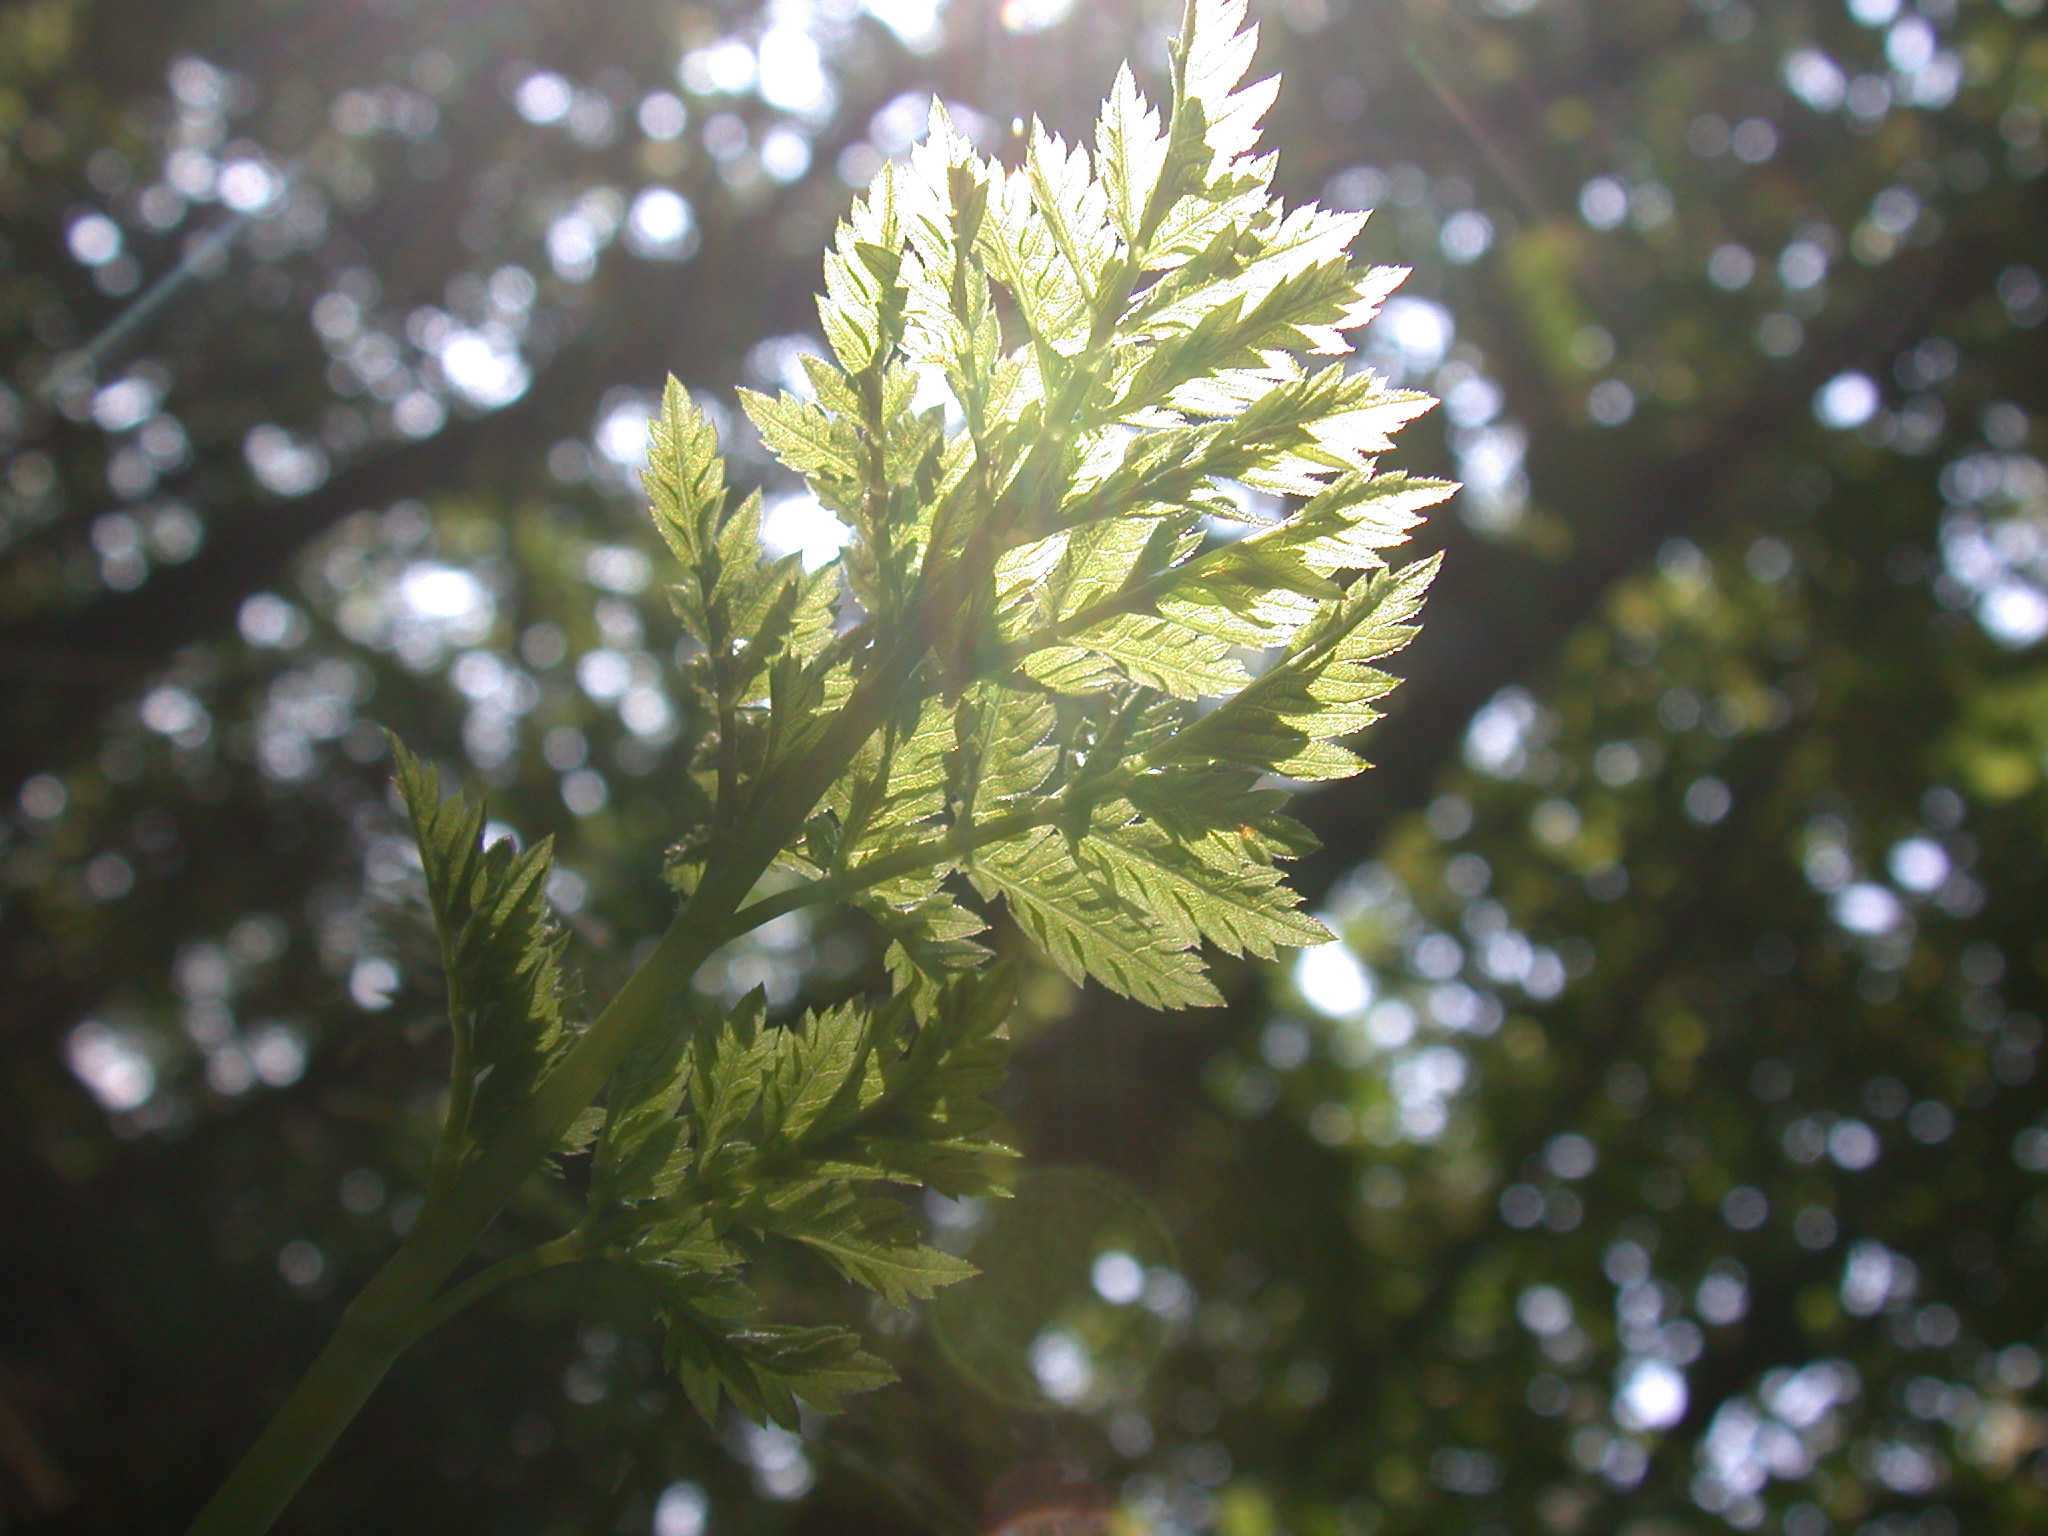 leaf plant in sun sunlight beams lensflare summer spring sunny